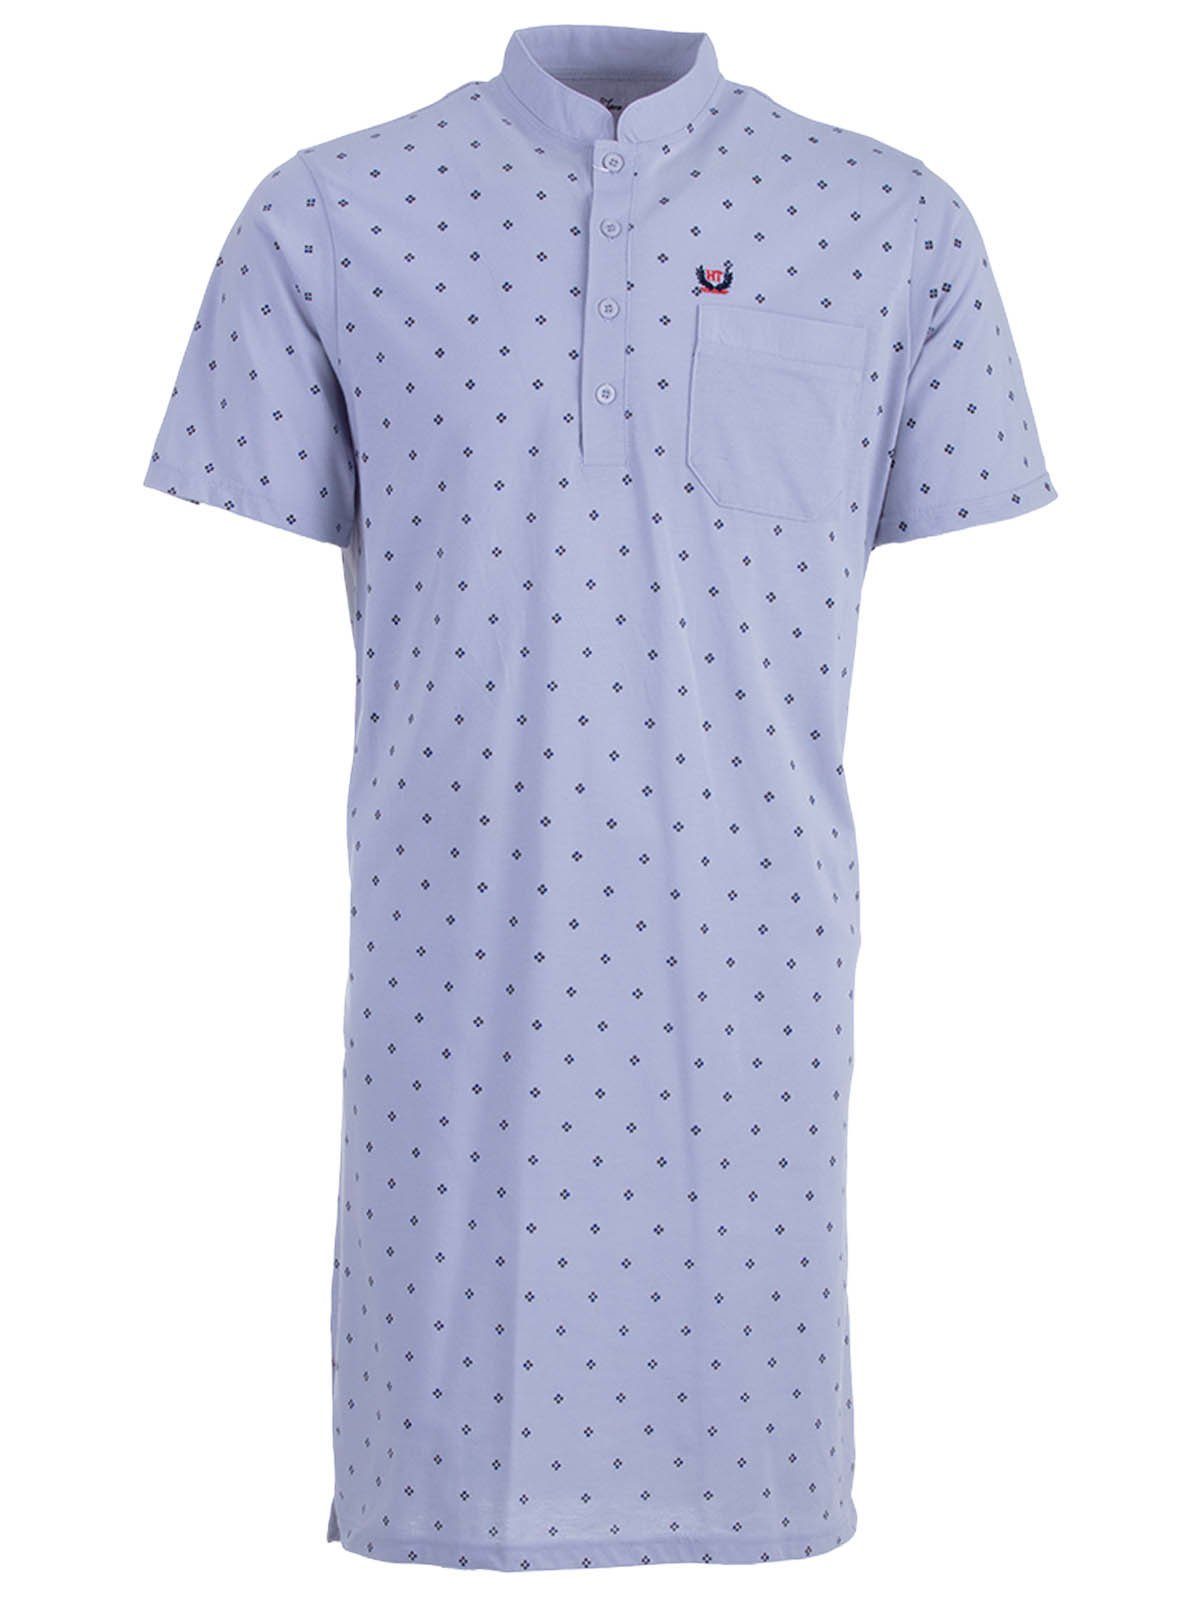 Henry Terre Nachthemd Nachthemd Kurzarm- Stehkragen grau